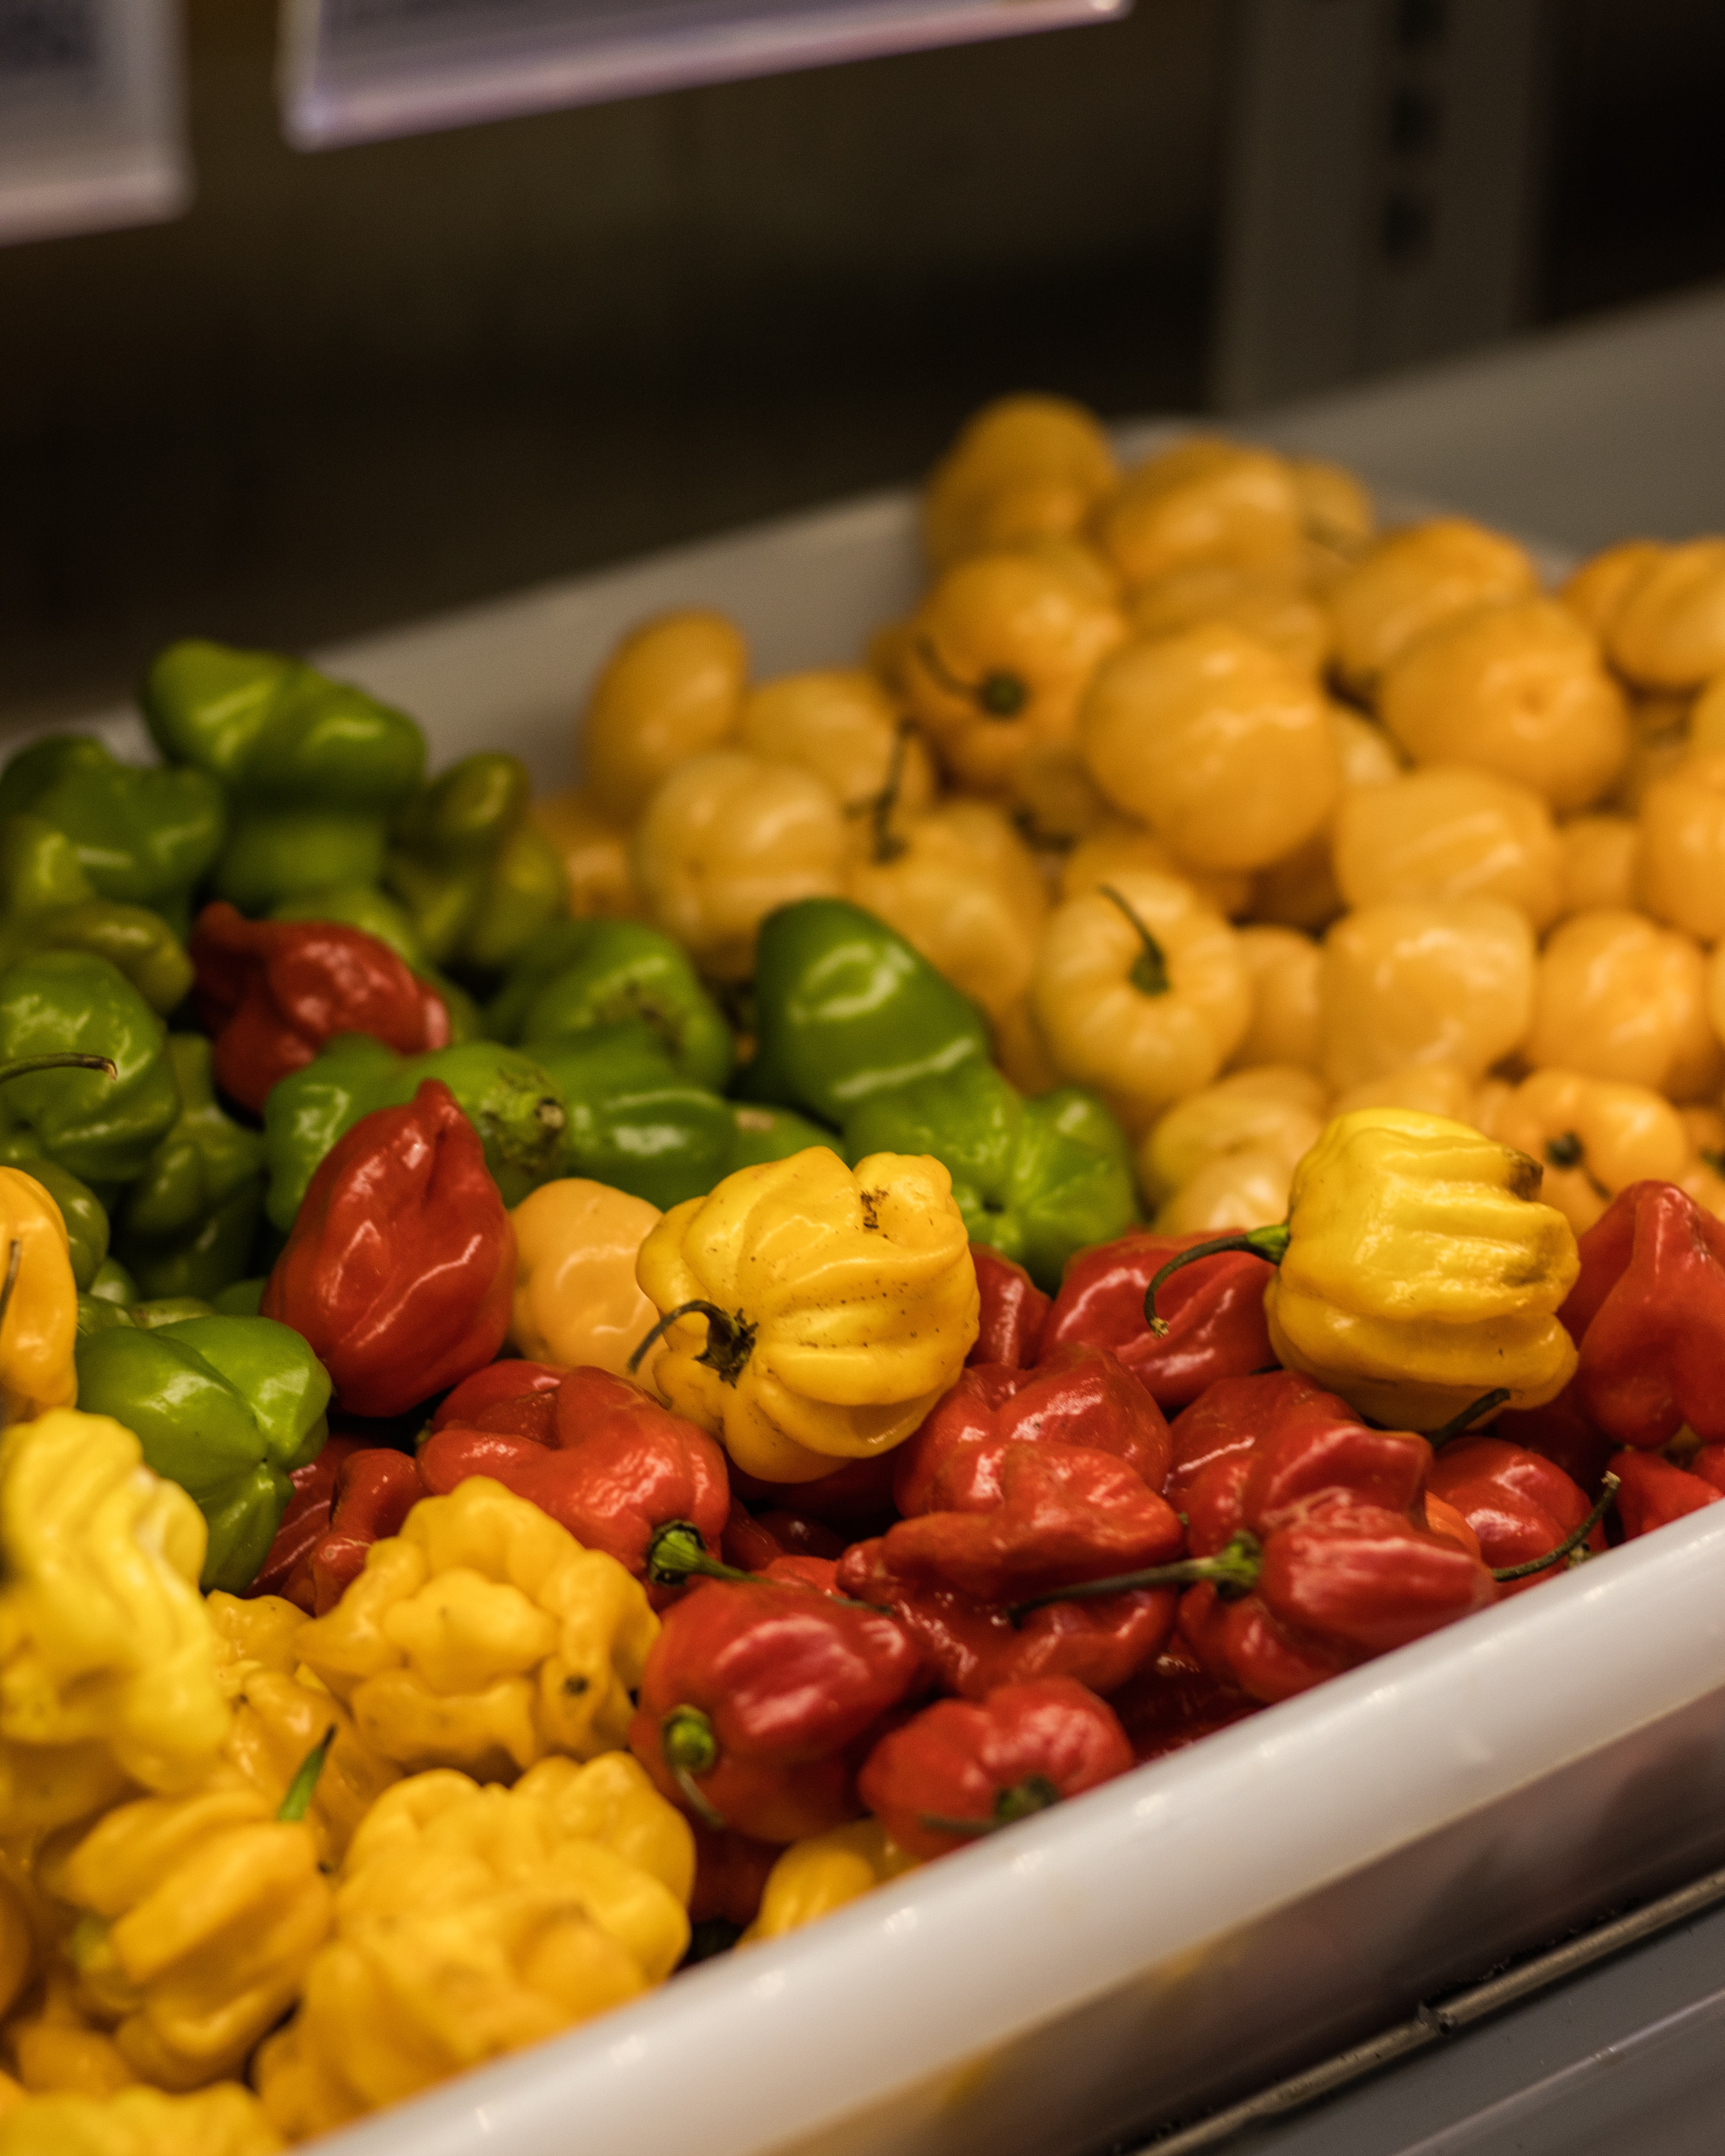 chili pepper fruits